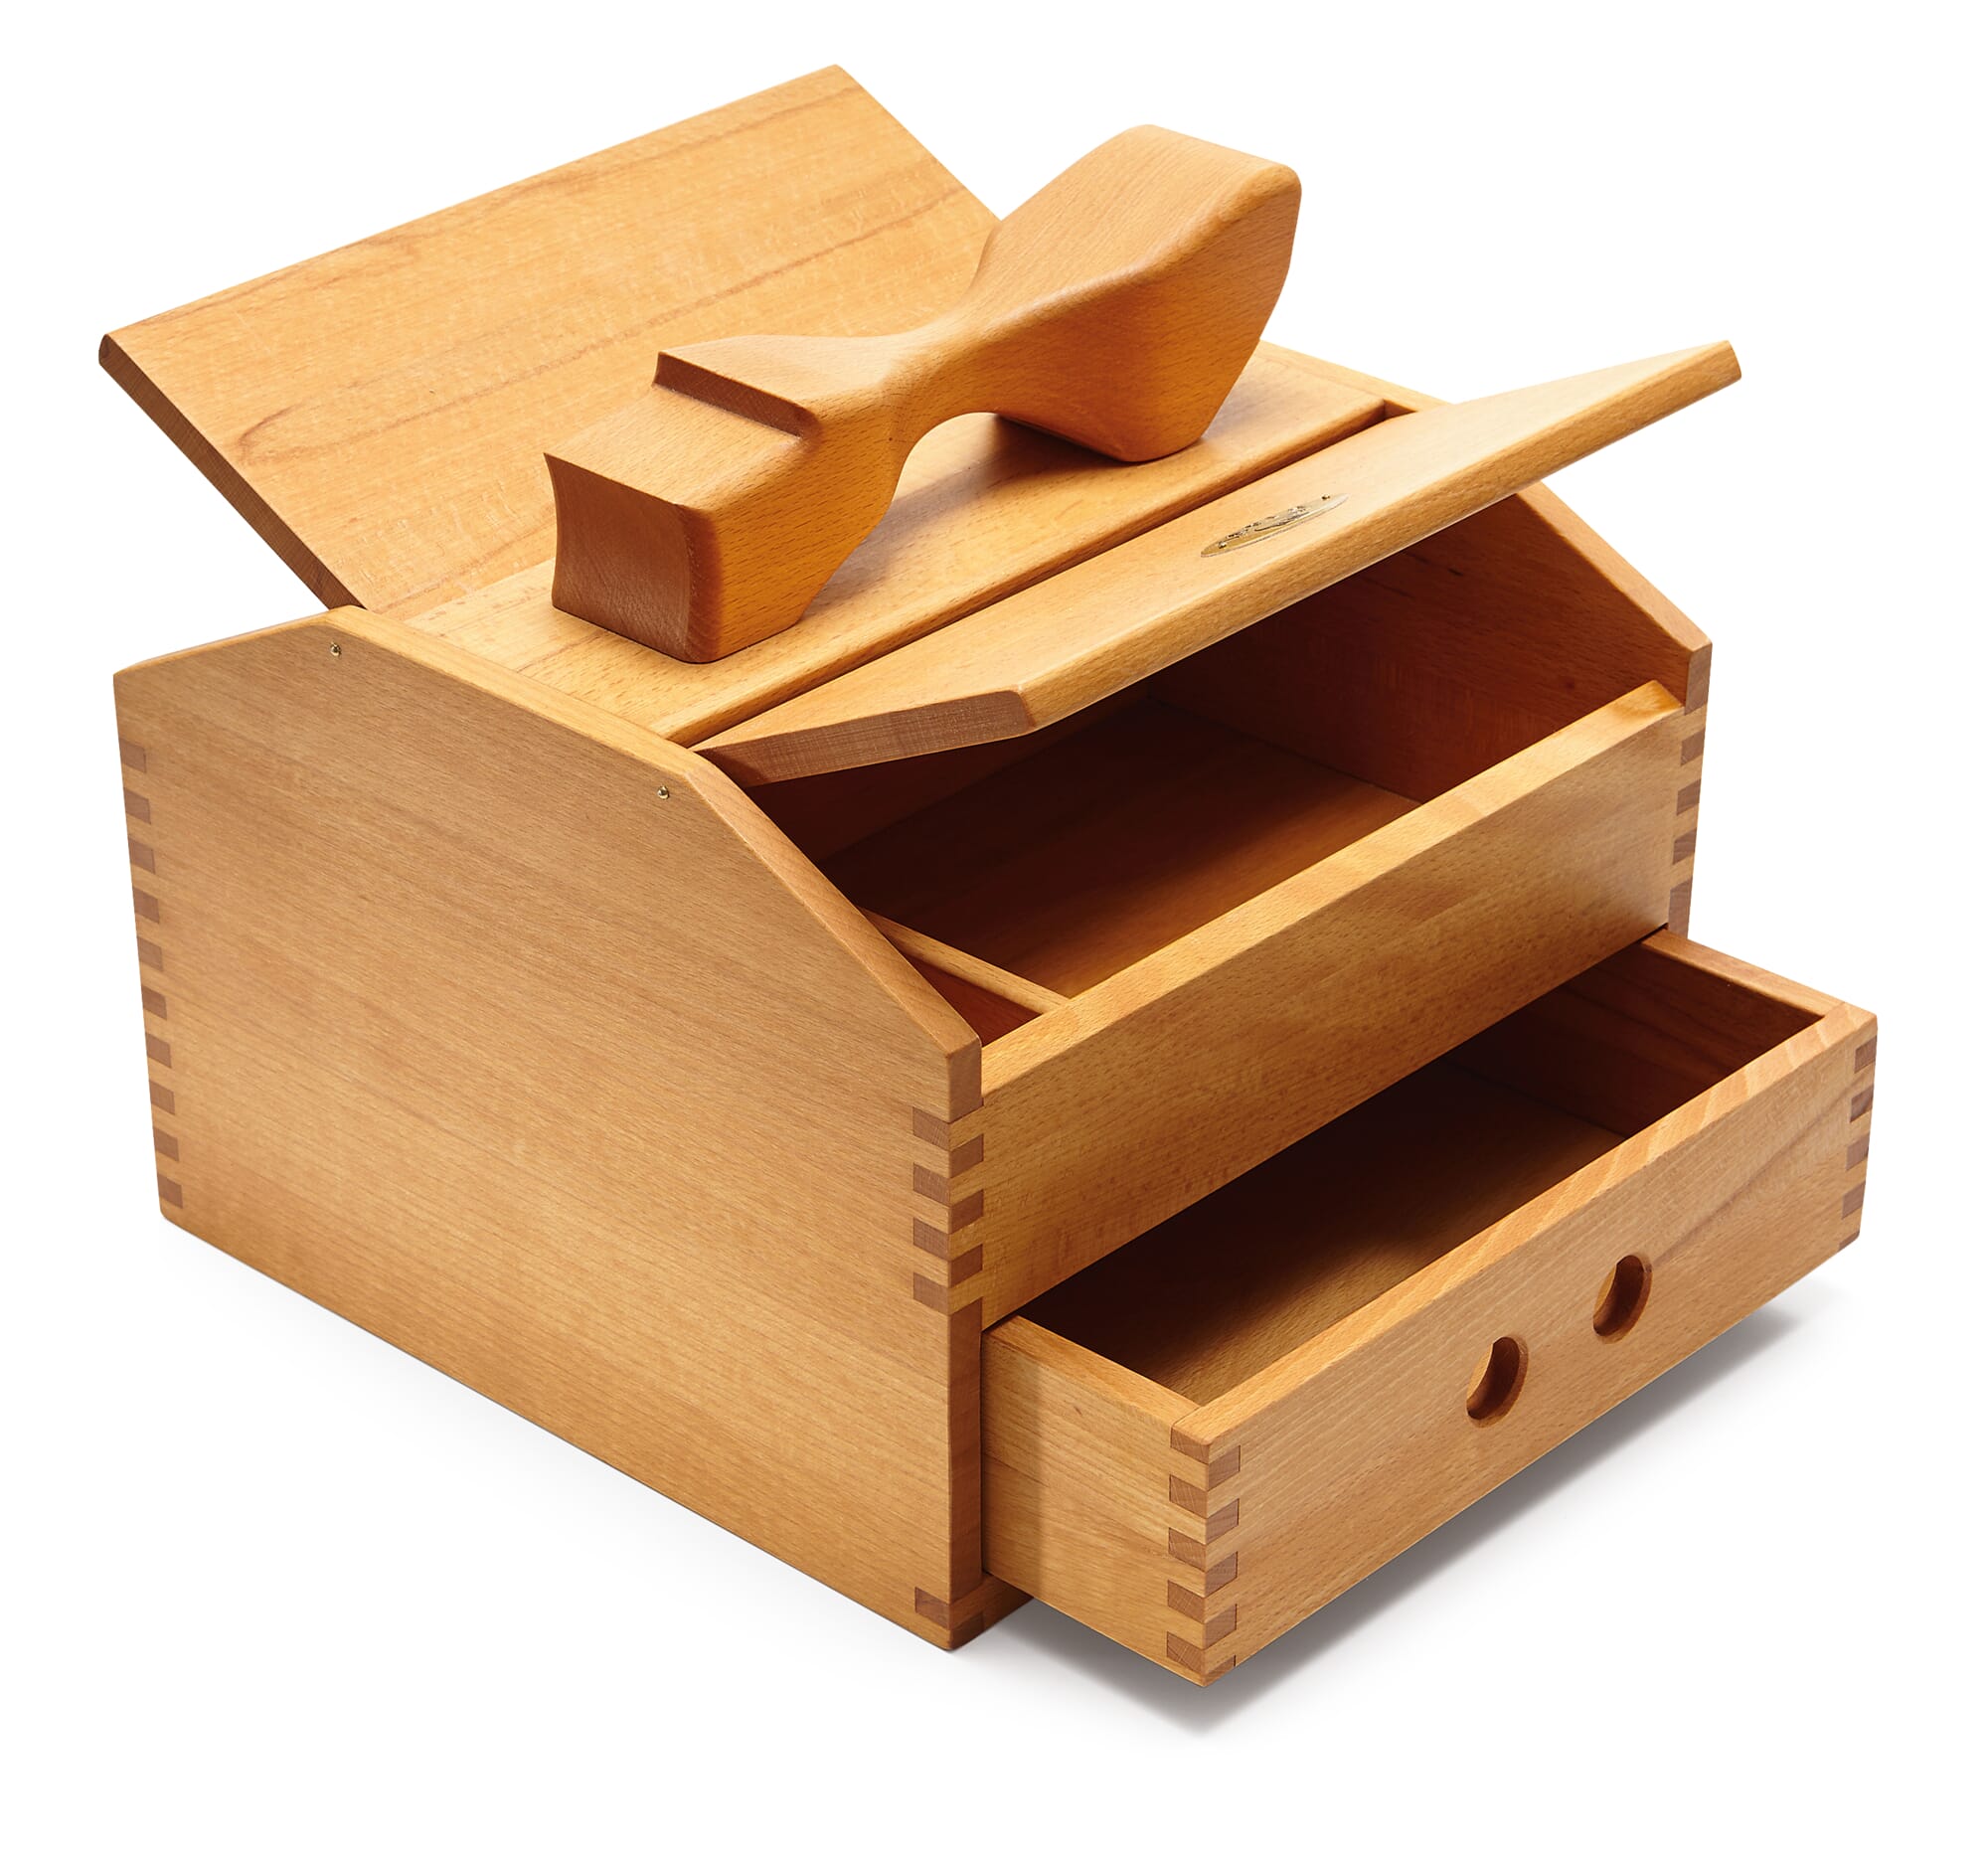 Tapir shoe polish box with handle and drawer